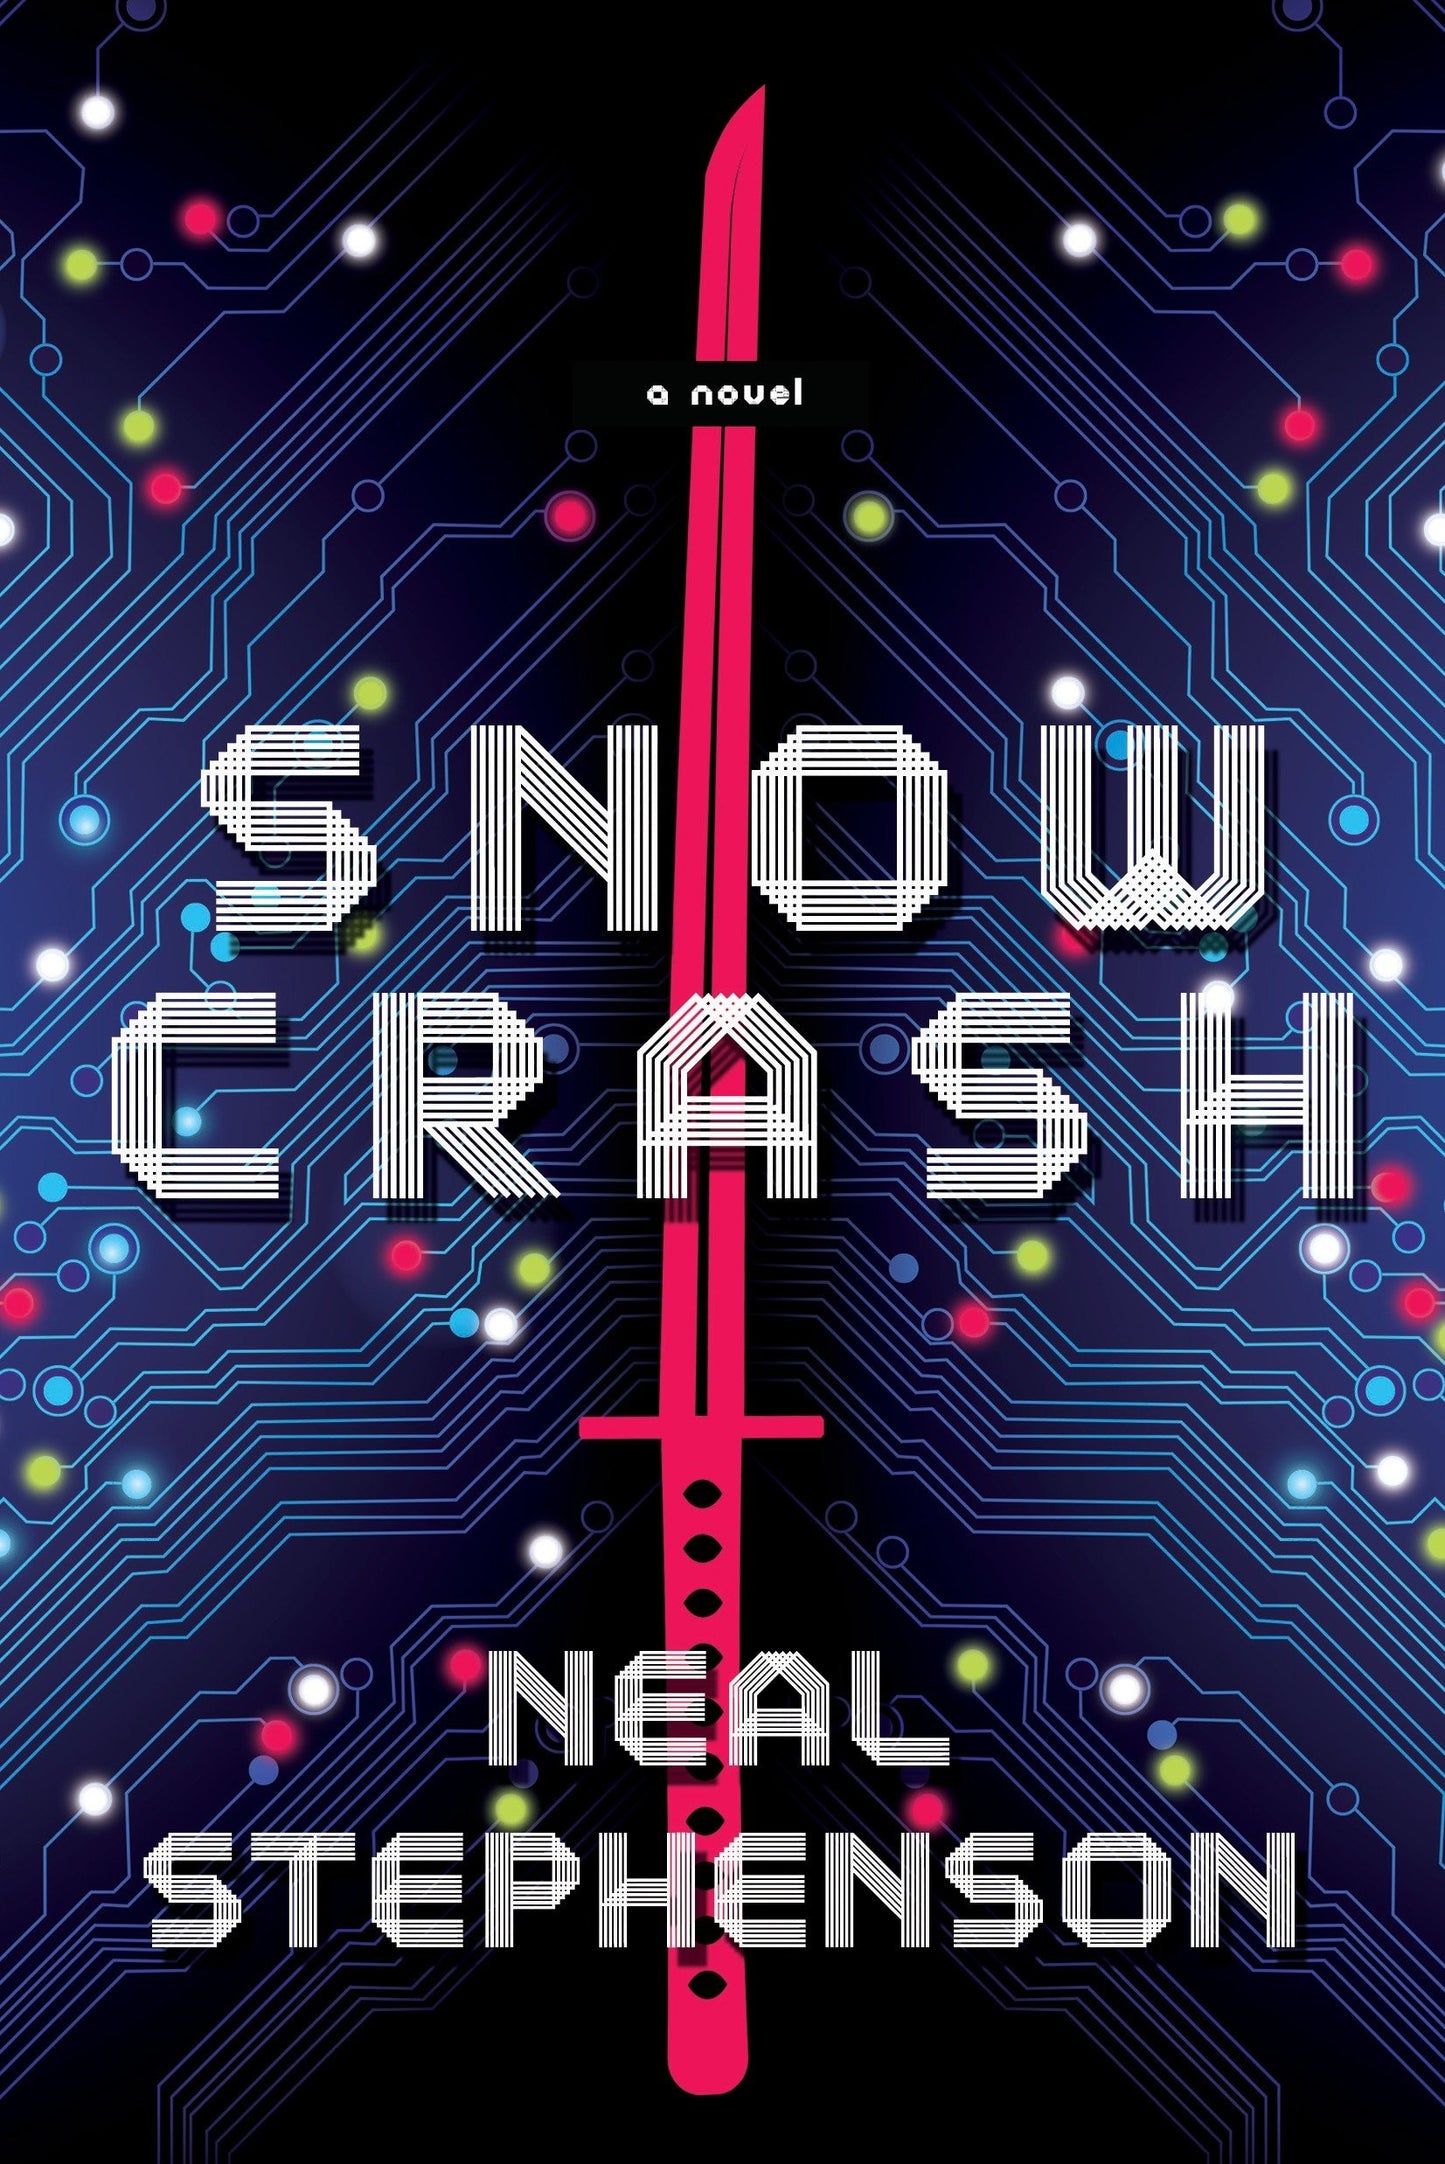 Book: Snow Crash